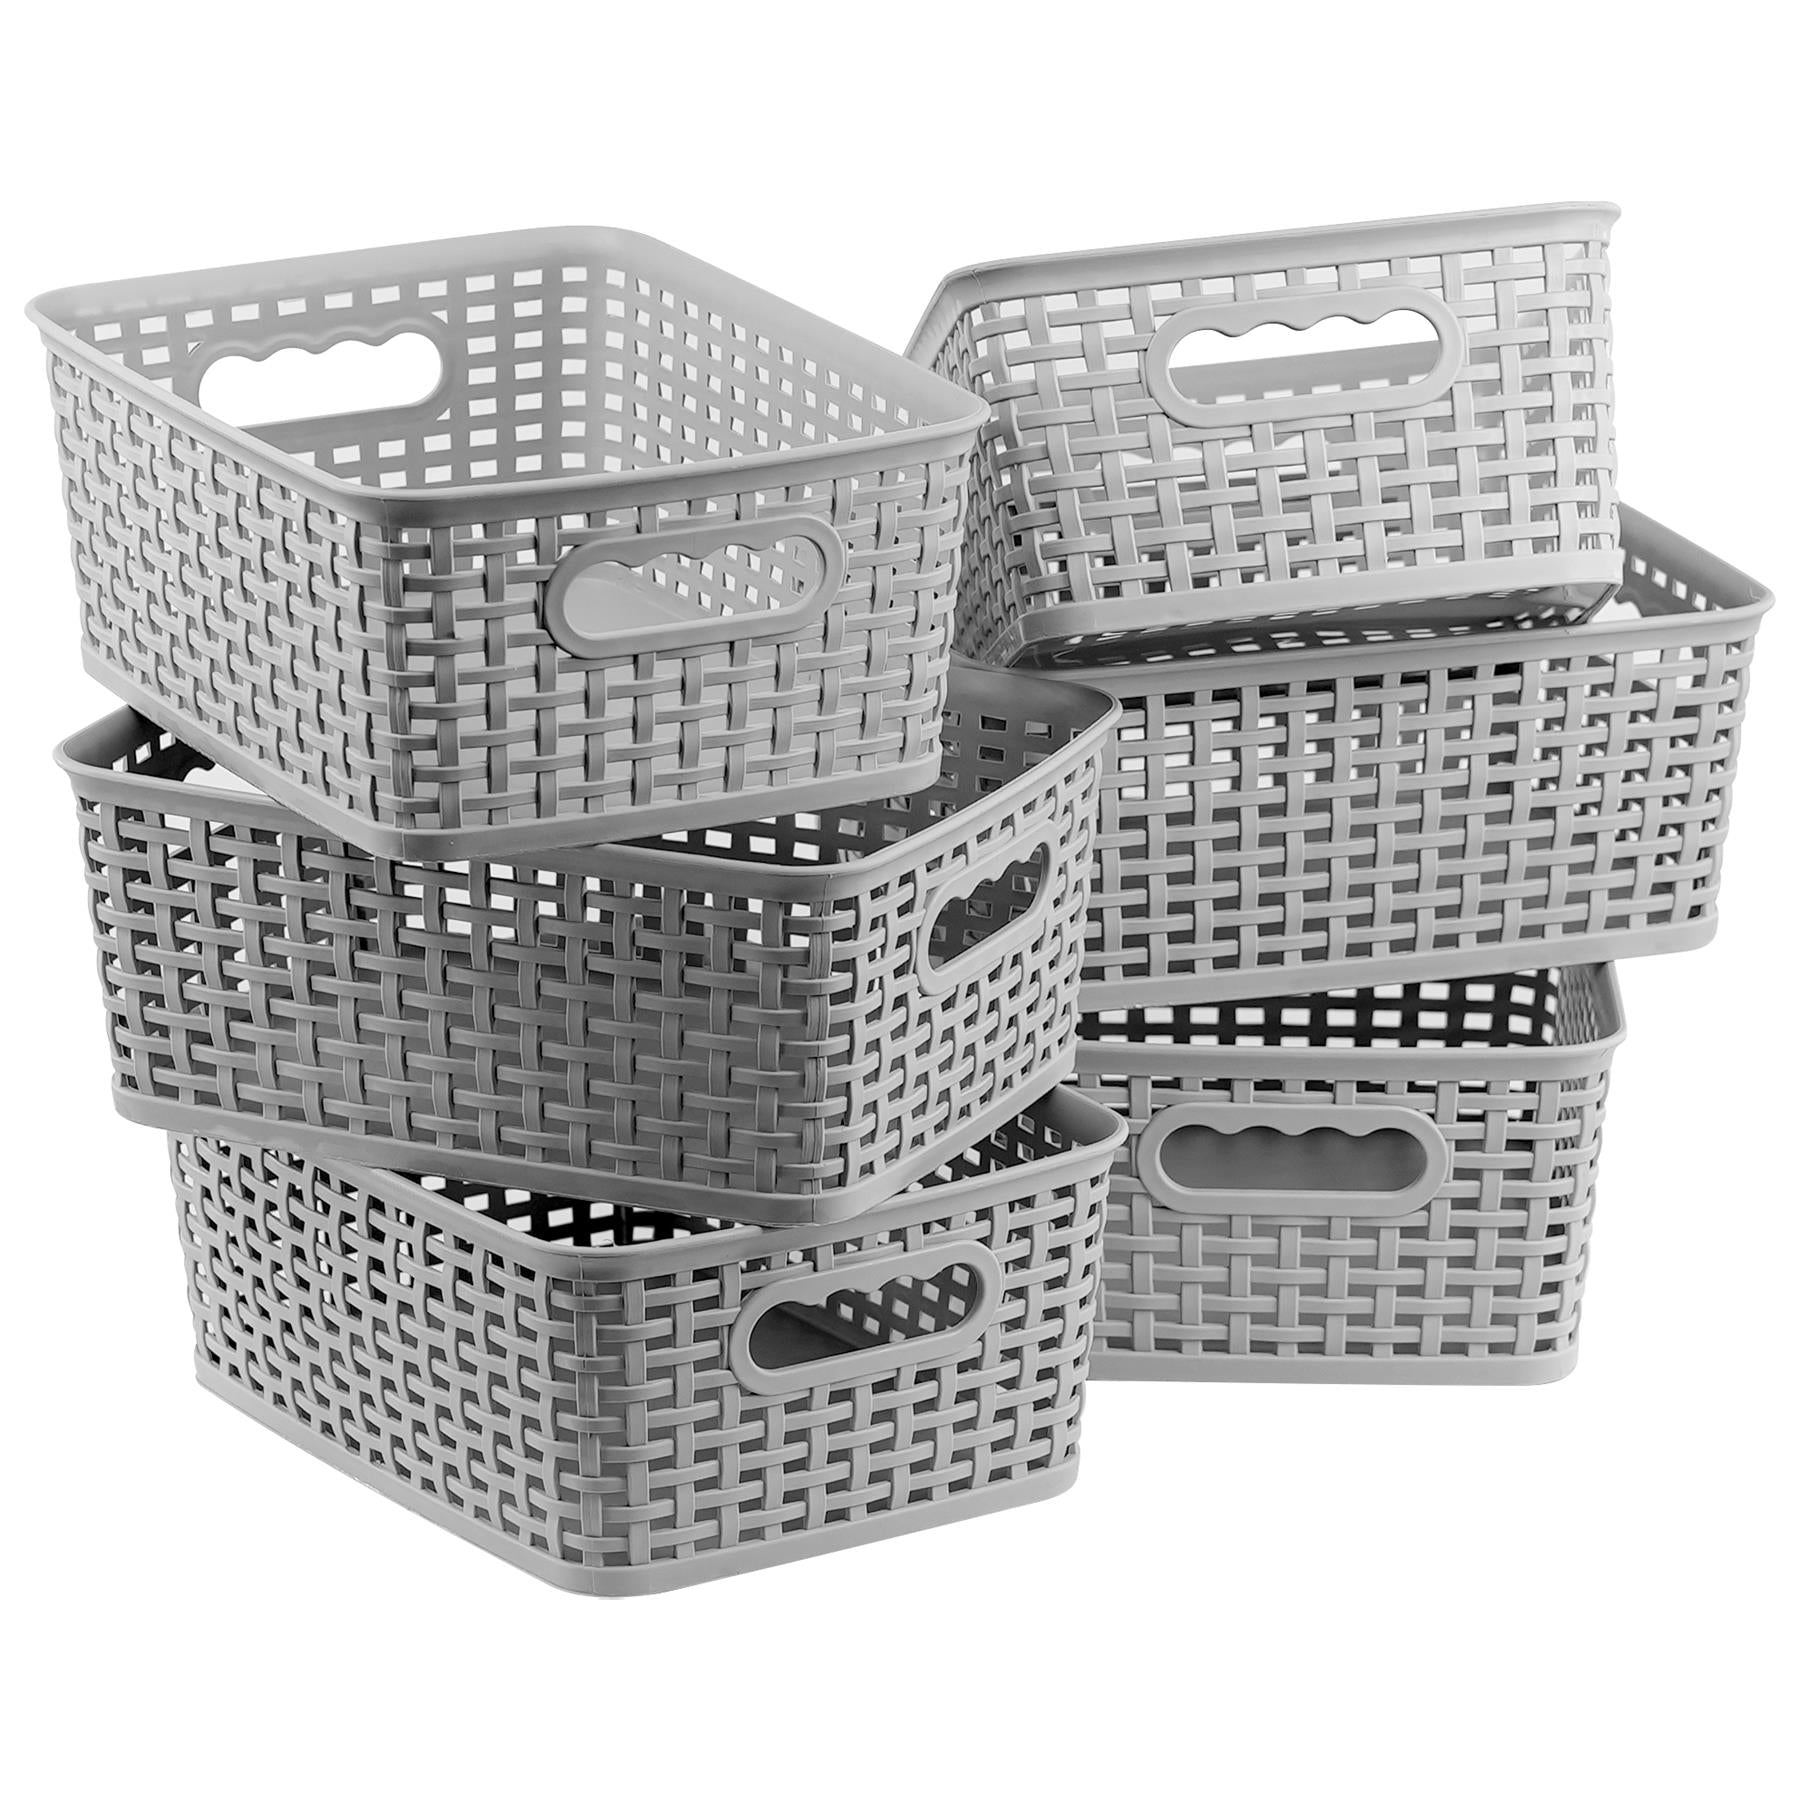 GEEZY Plastic Storage Baskets Set of 6